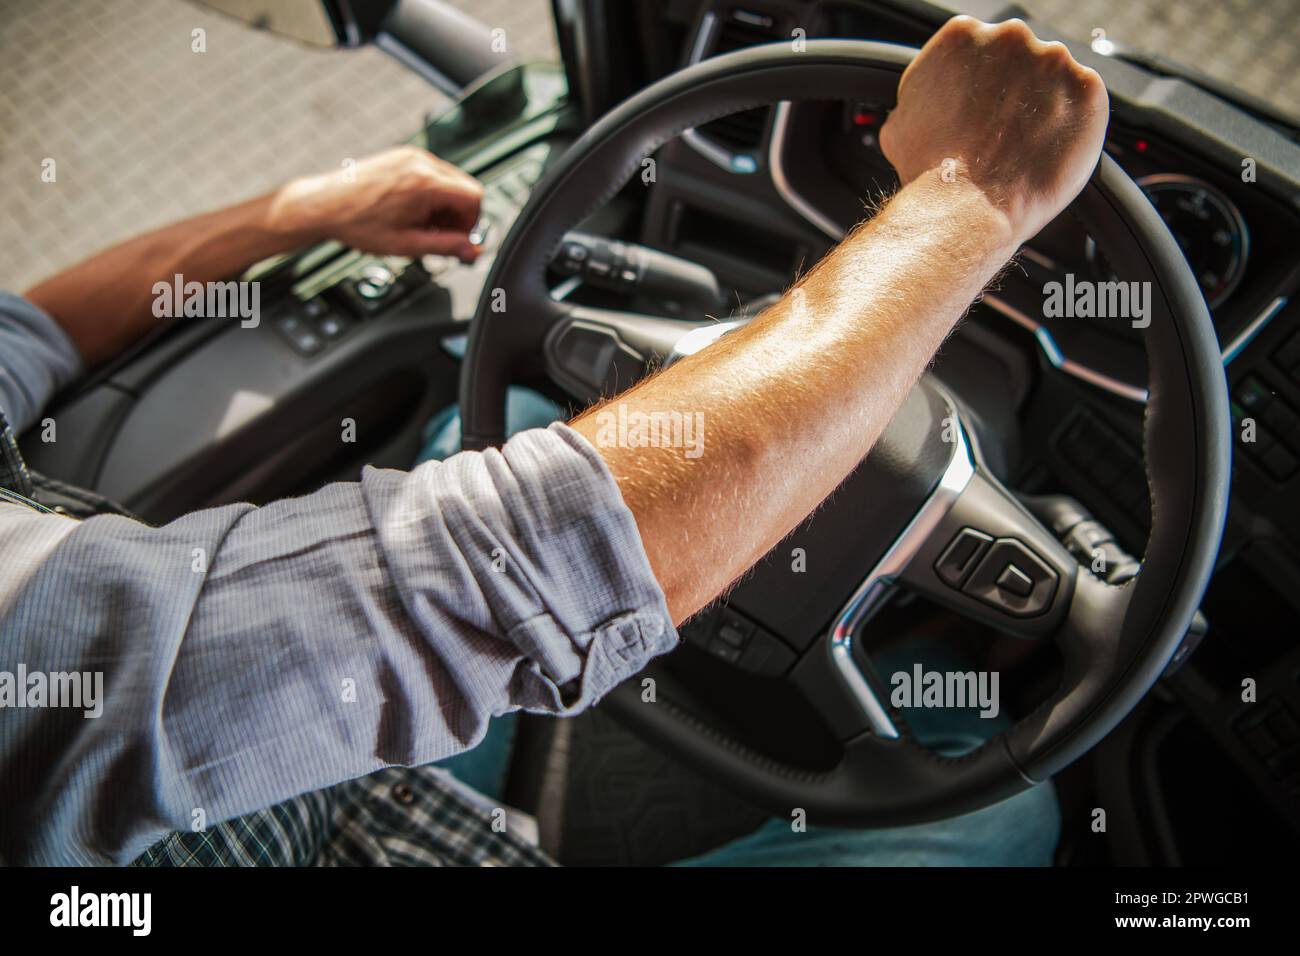 https://c8.alamy.com/comp/2PWGCB1/truckers-hand-on-a-semi-truck-steering-wheel-close-up-photo-caucasian-professional-driver-theme-transportation-industry-2PWGCB1.jpg